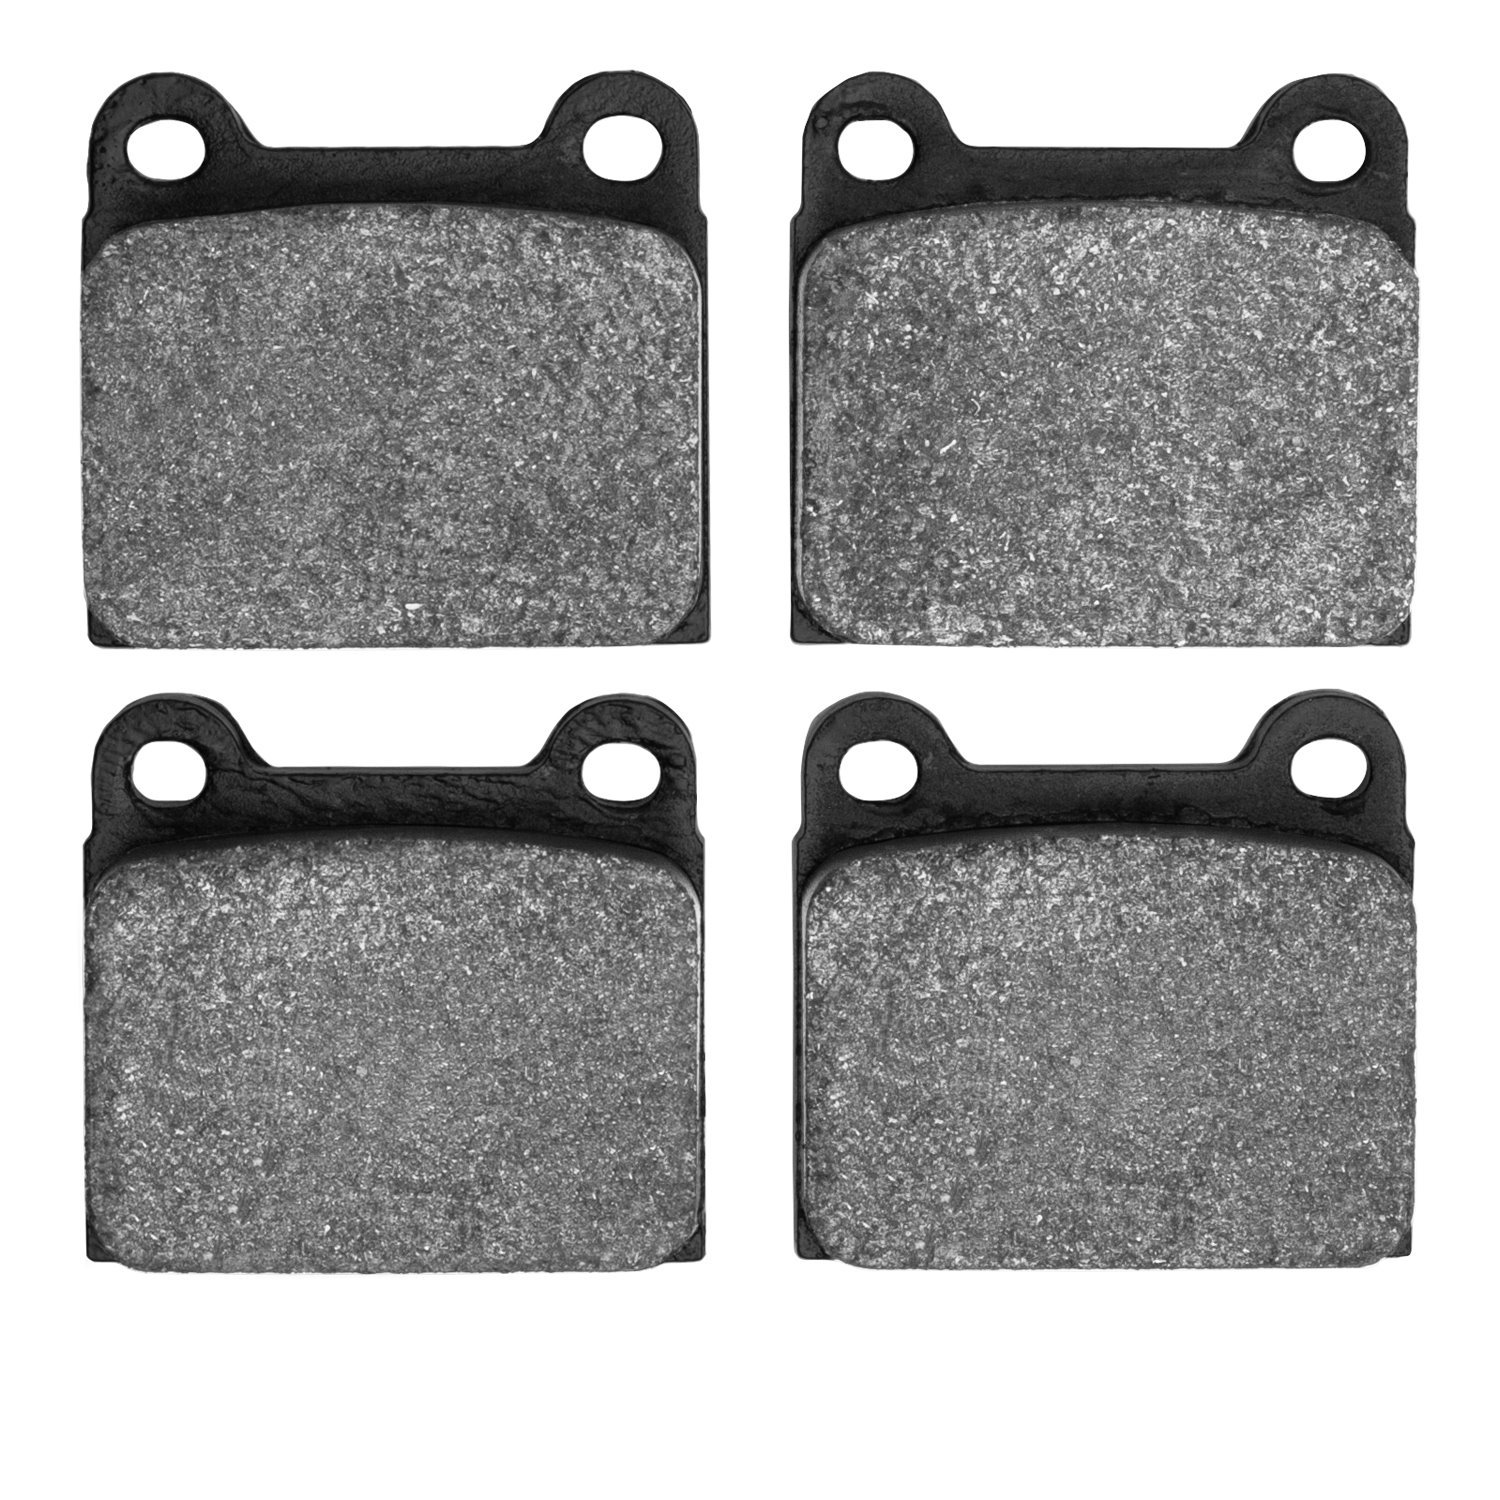 Semi-Metallic Brake Pads, 1961-2004 Fits Multiple Makes/Models, Position: Front & Rear